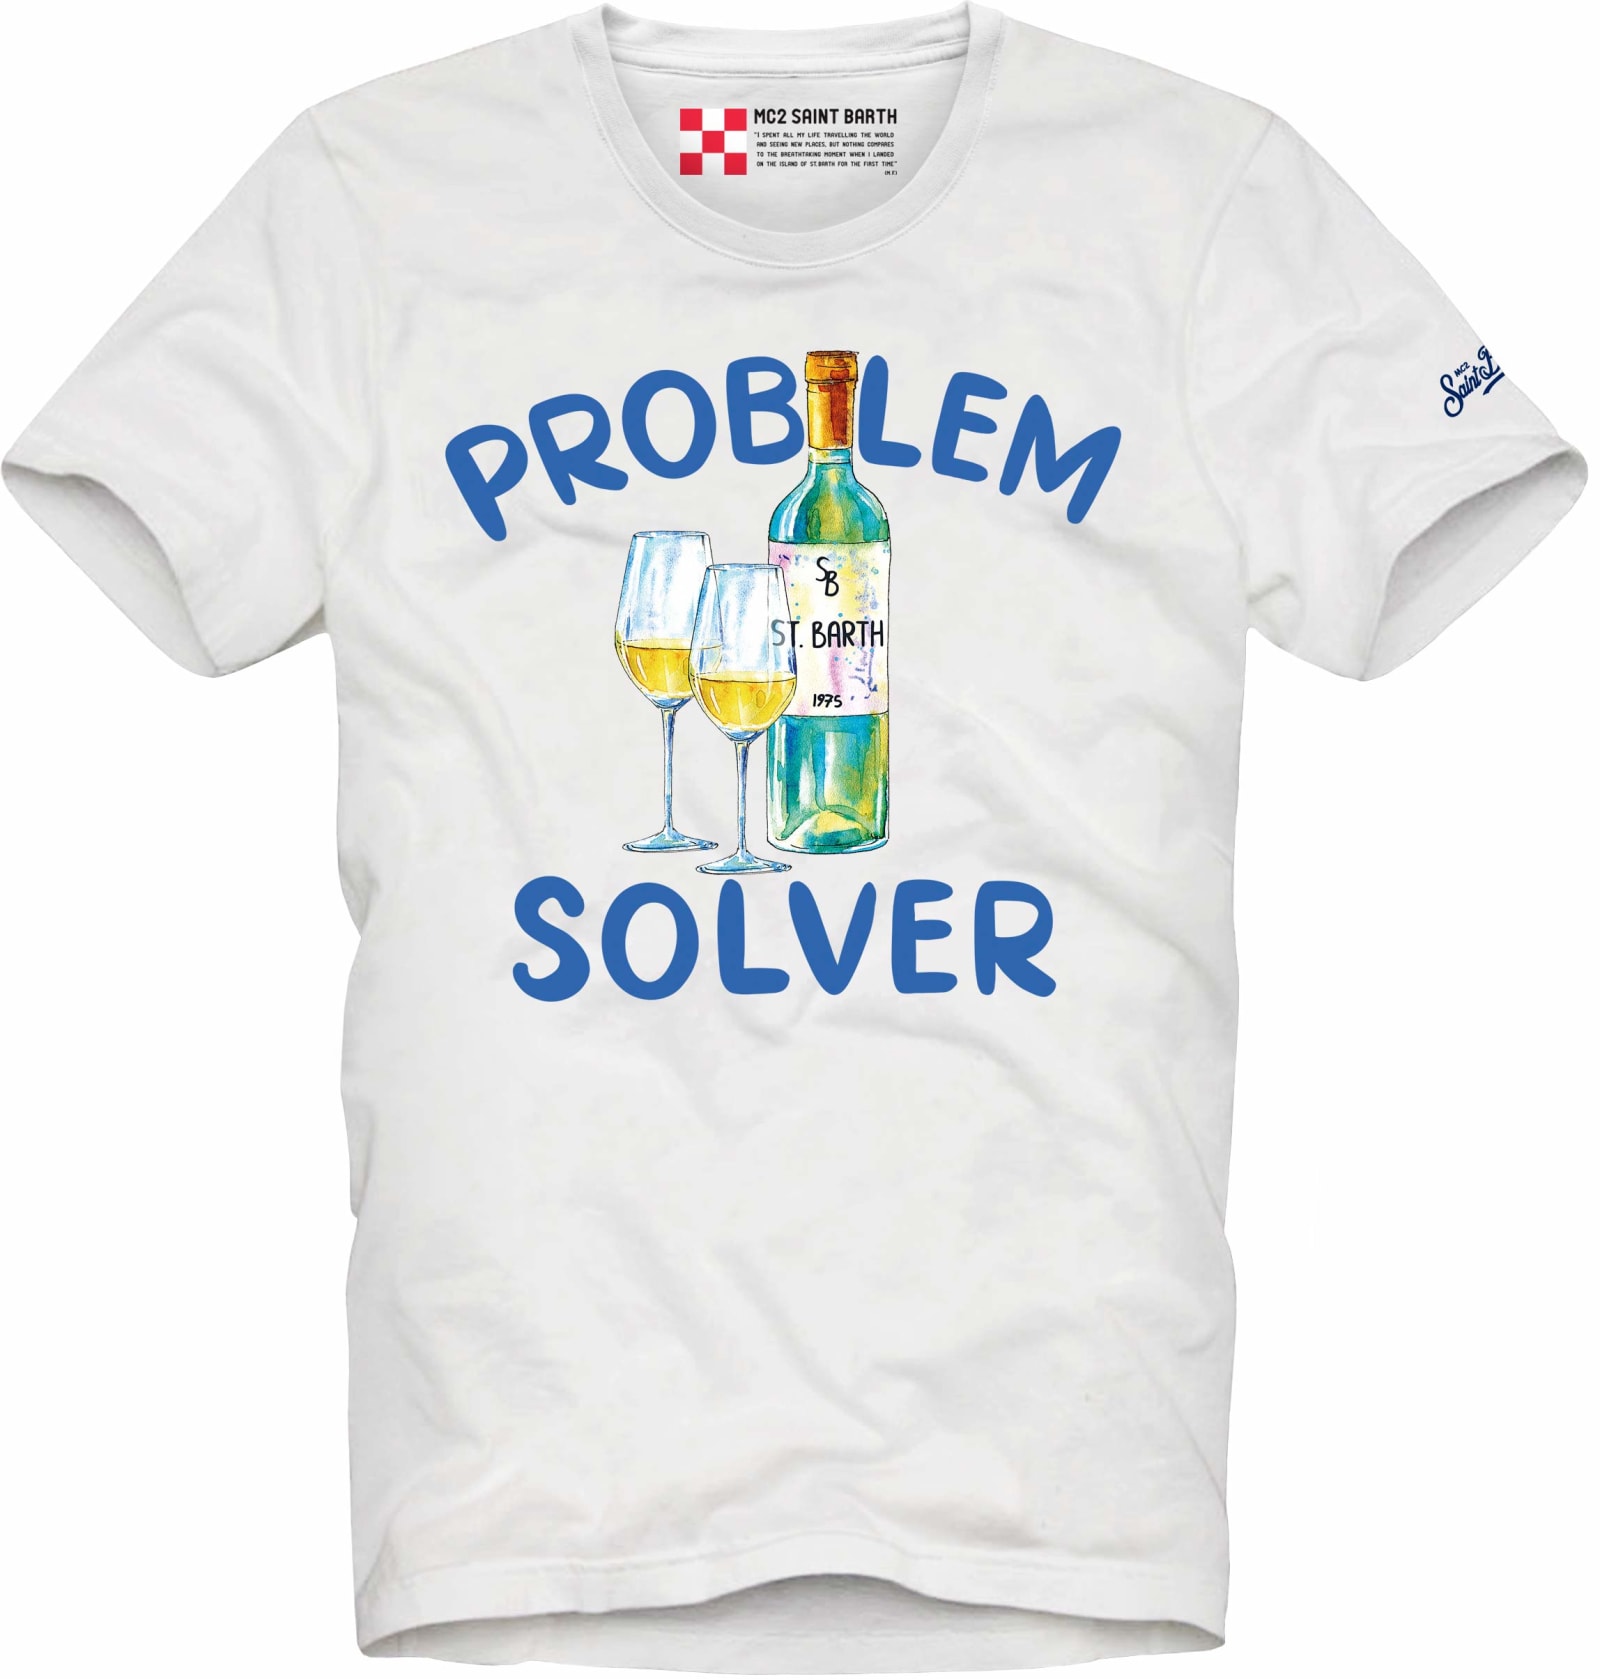 MC2 Saint Barth Problem Solver Printed White T-shirt